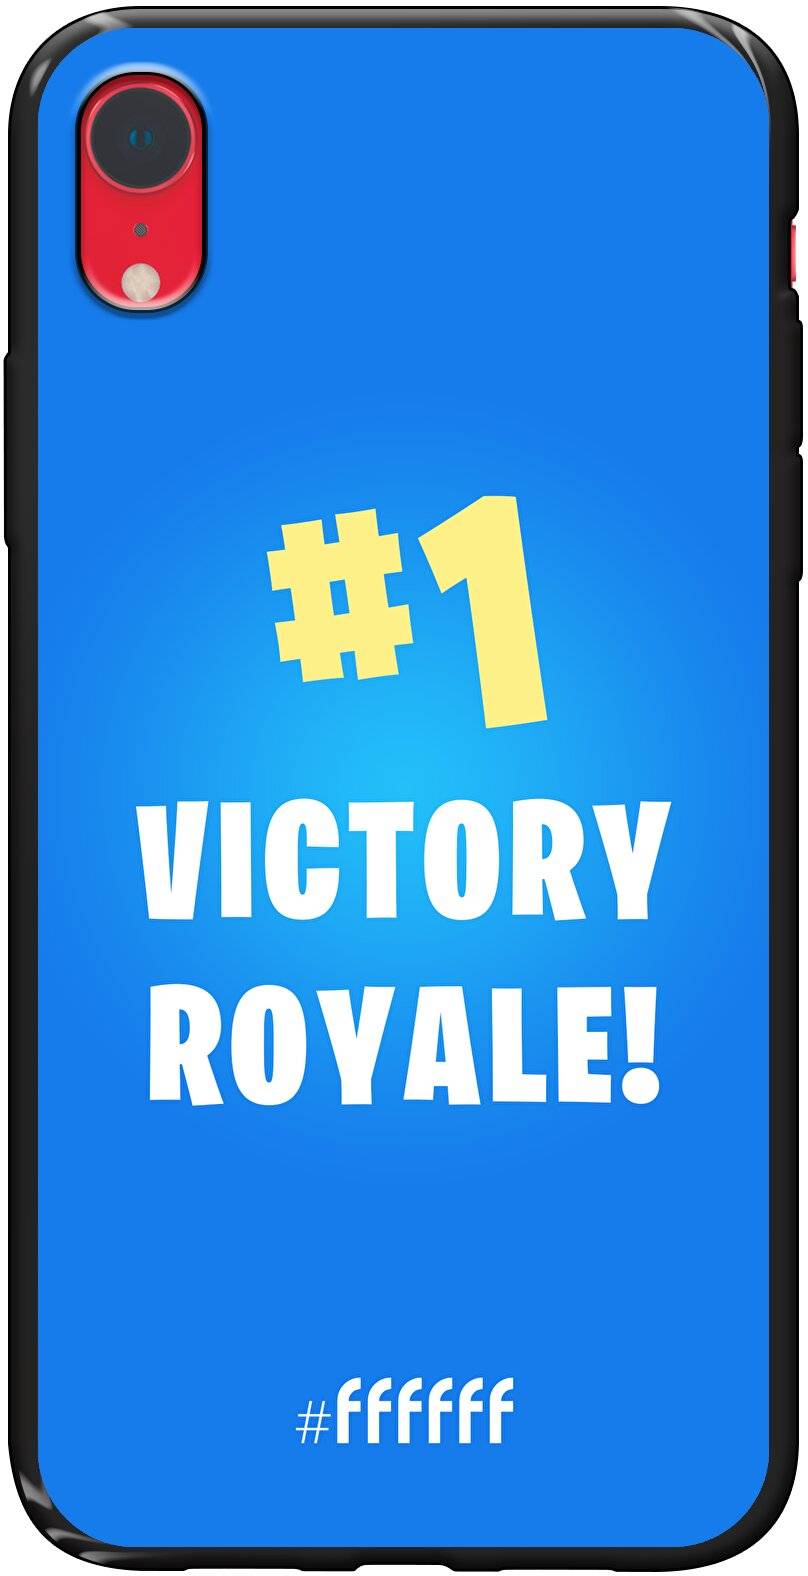 Battle Royale - Victory Royale iPhone Xr